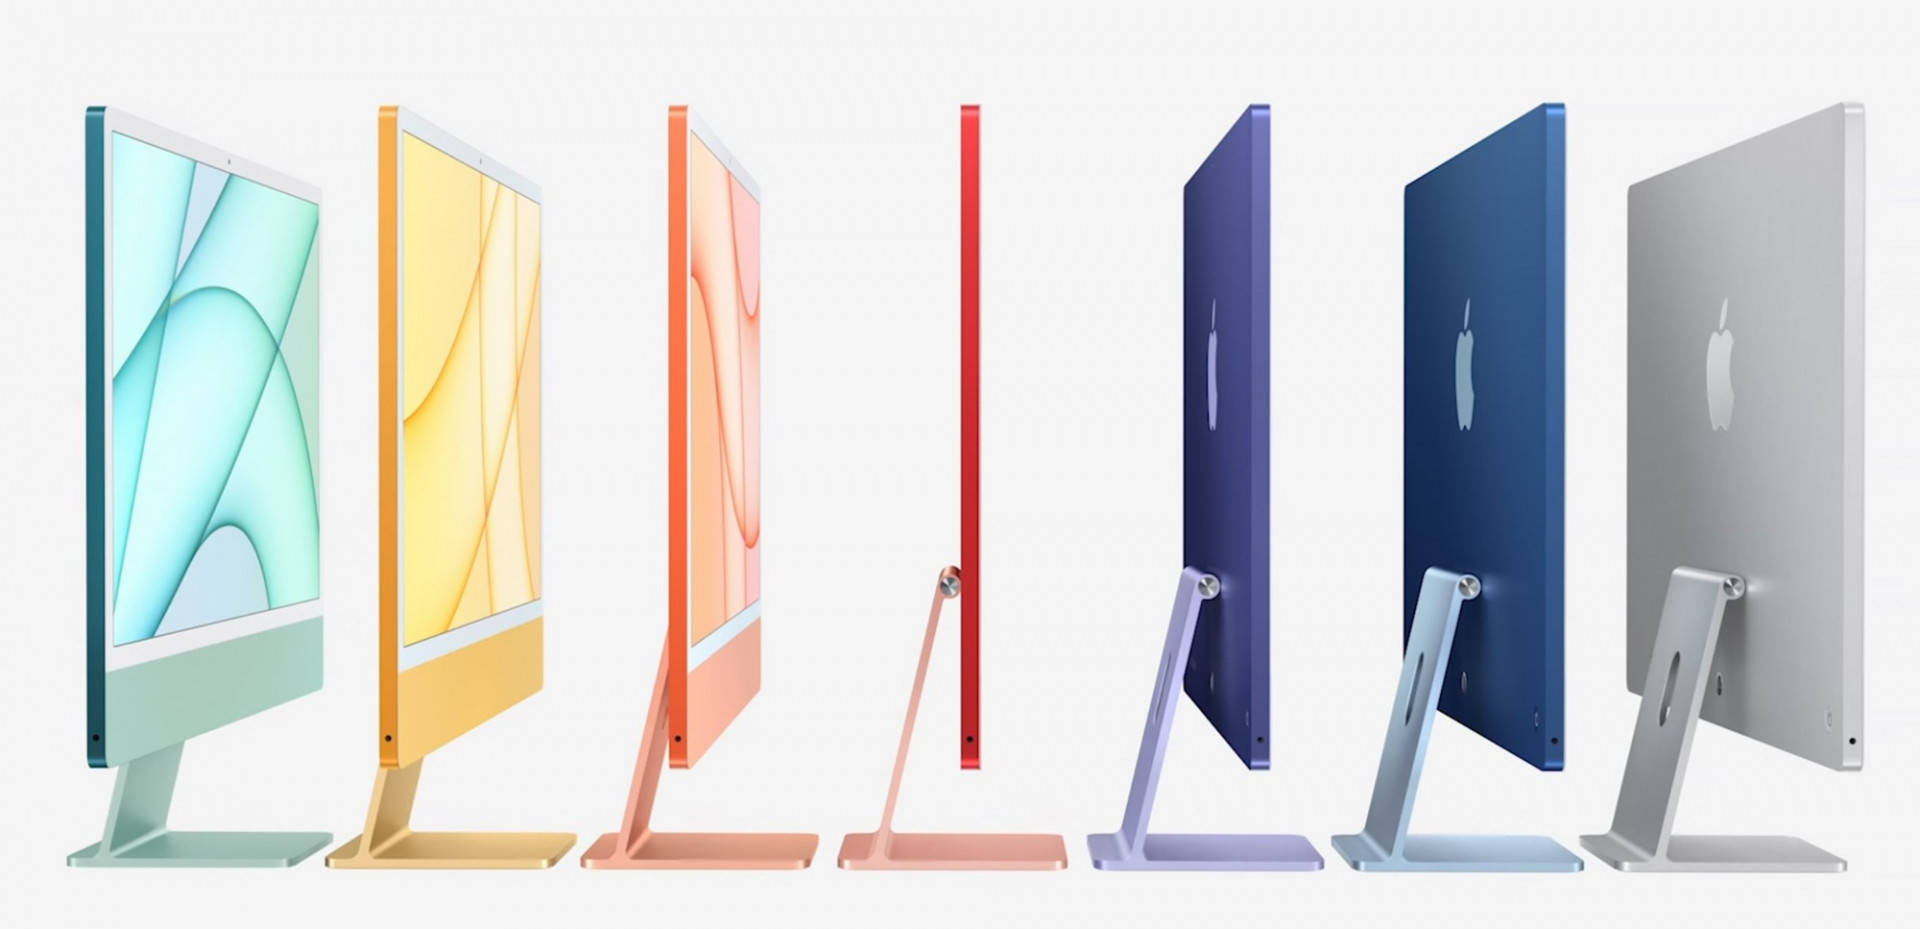 iMac|爆料称新一代MacBook Air也将引入多彩配色